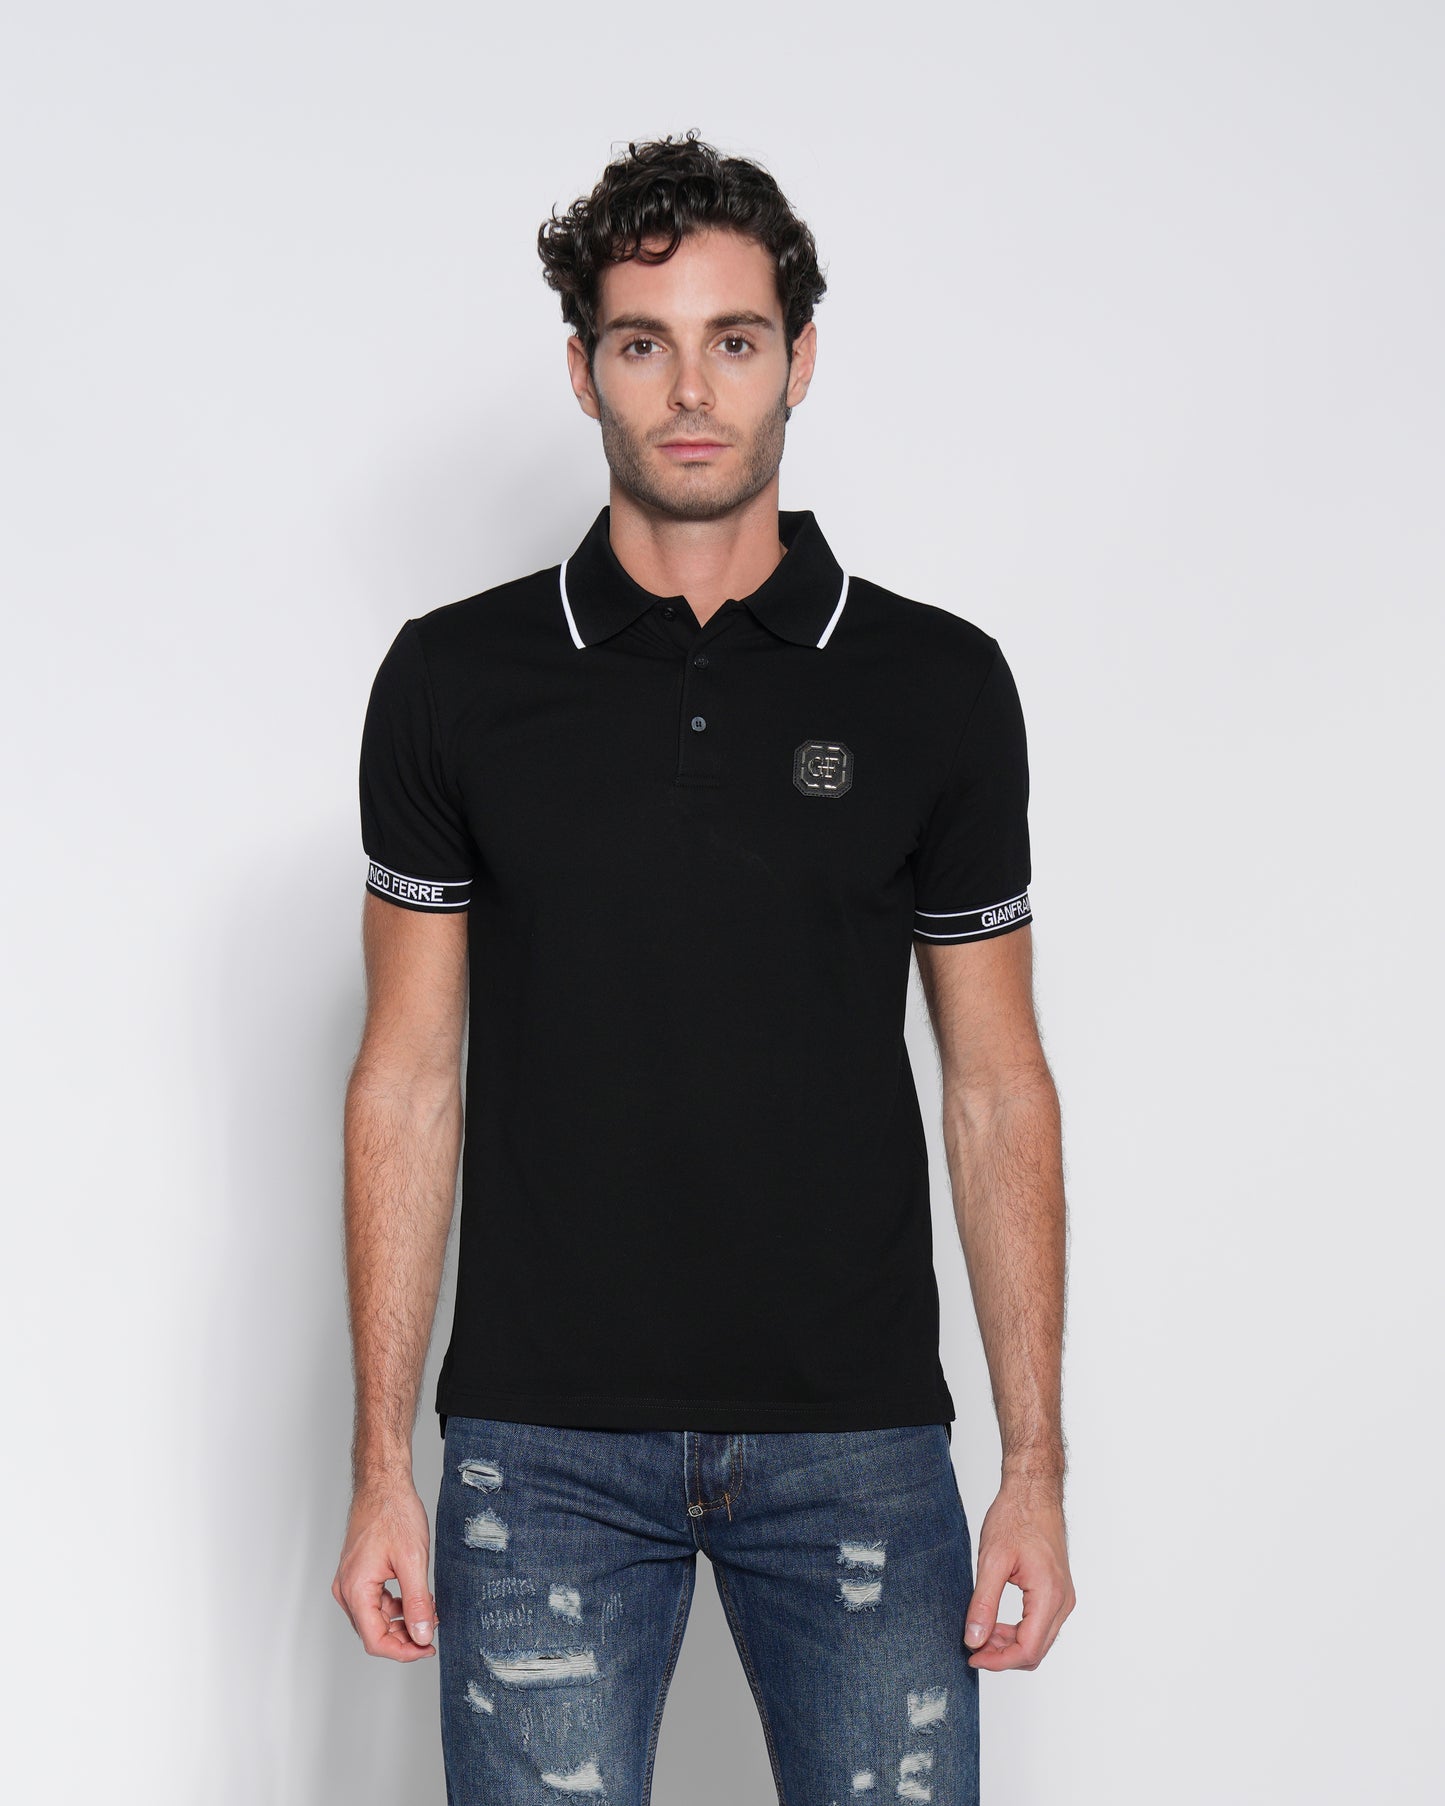 Black Jacquard Cotton Polo-Shirt